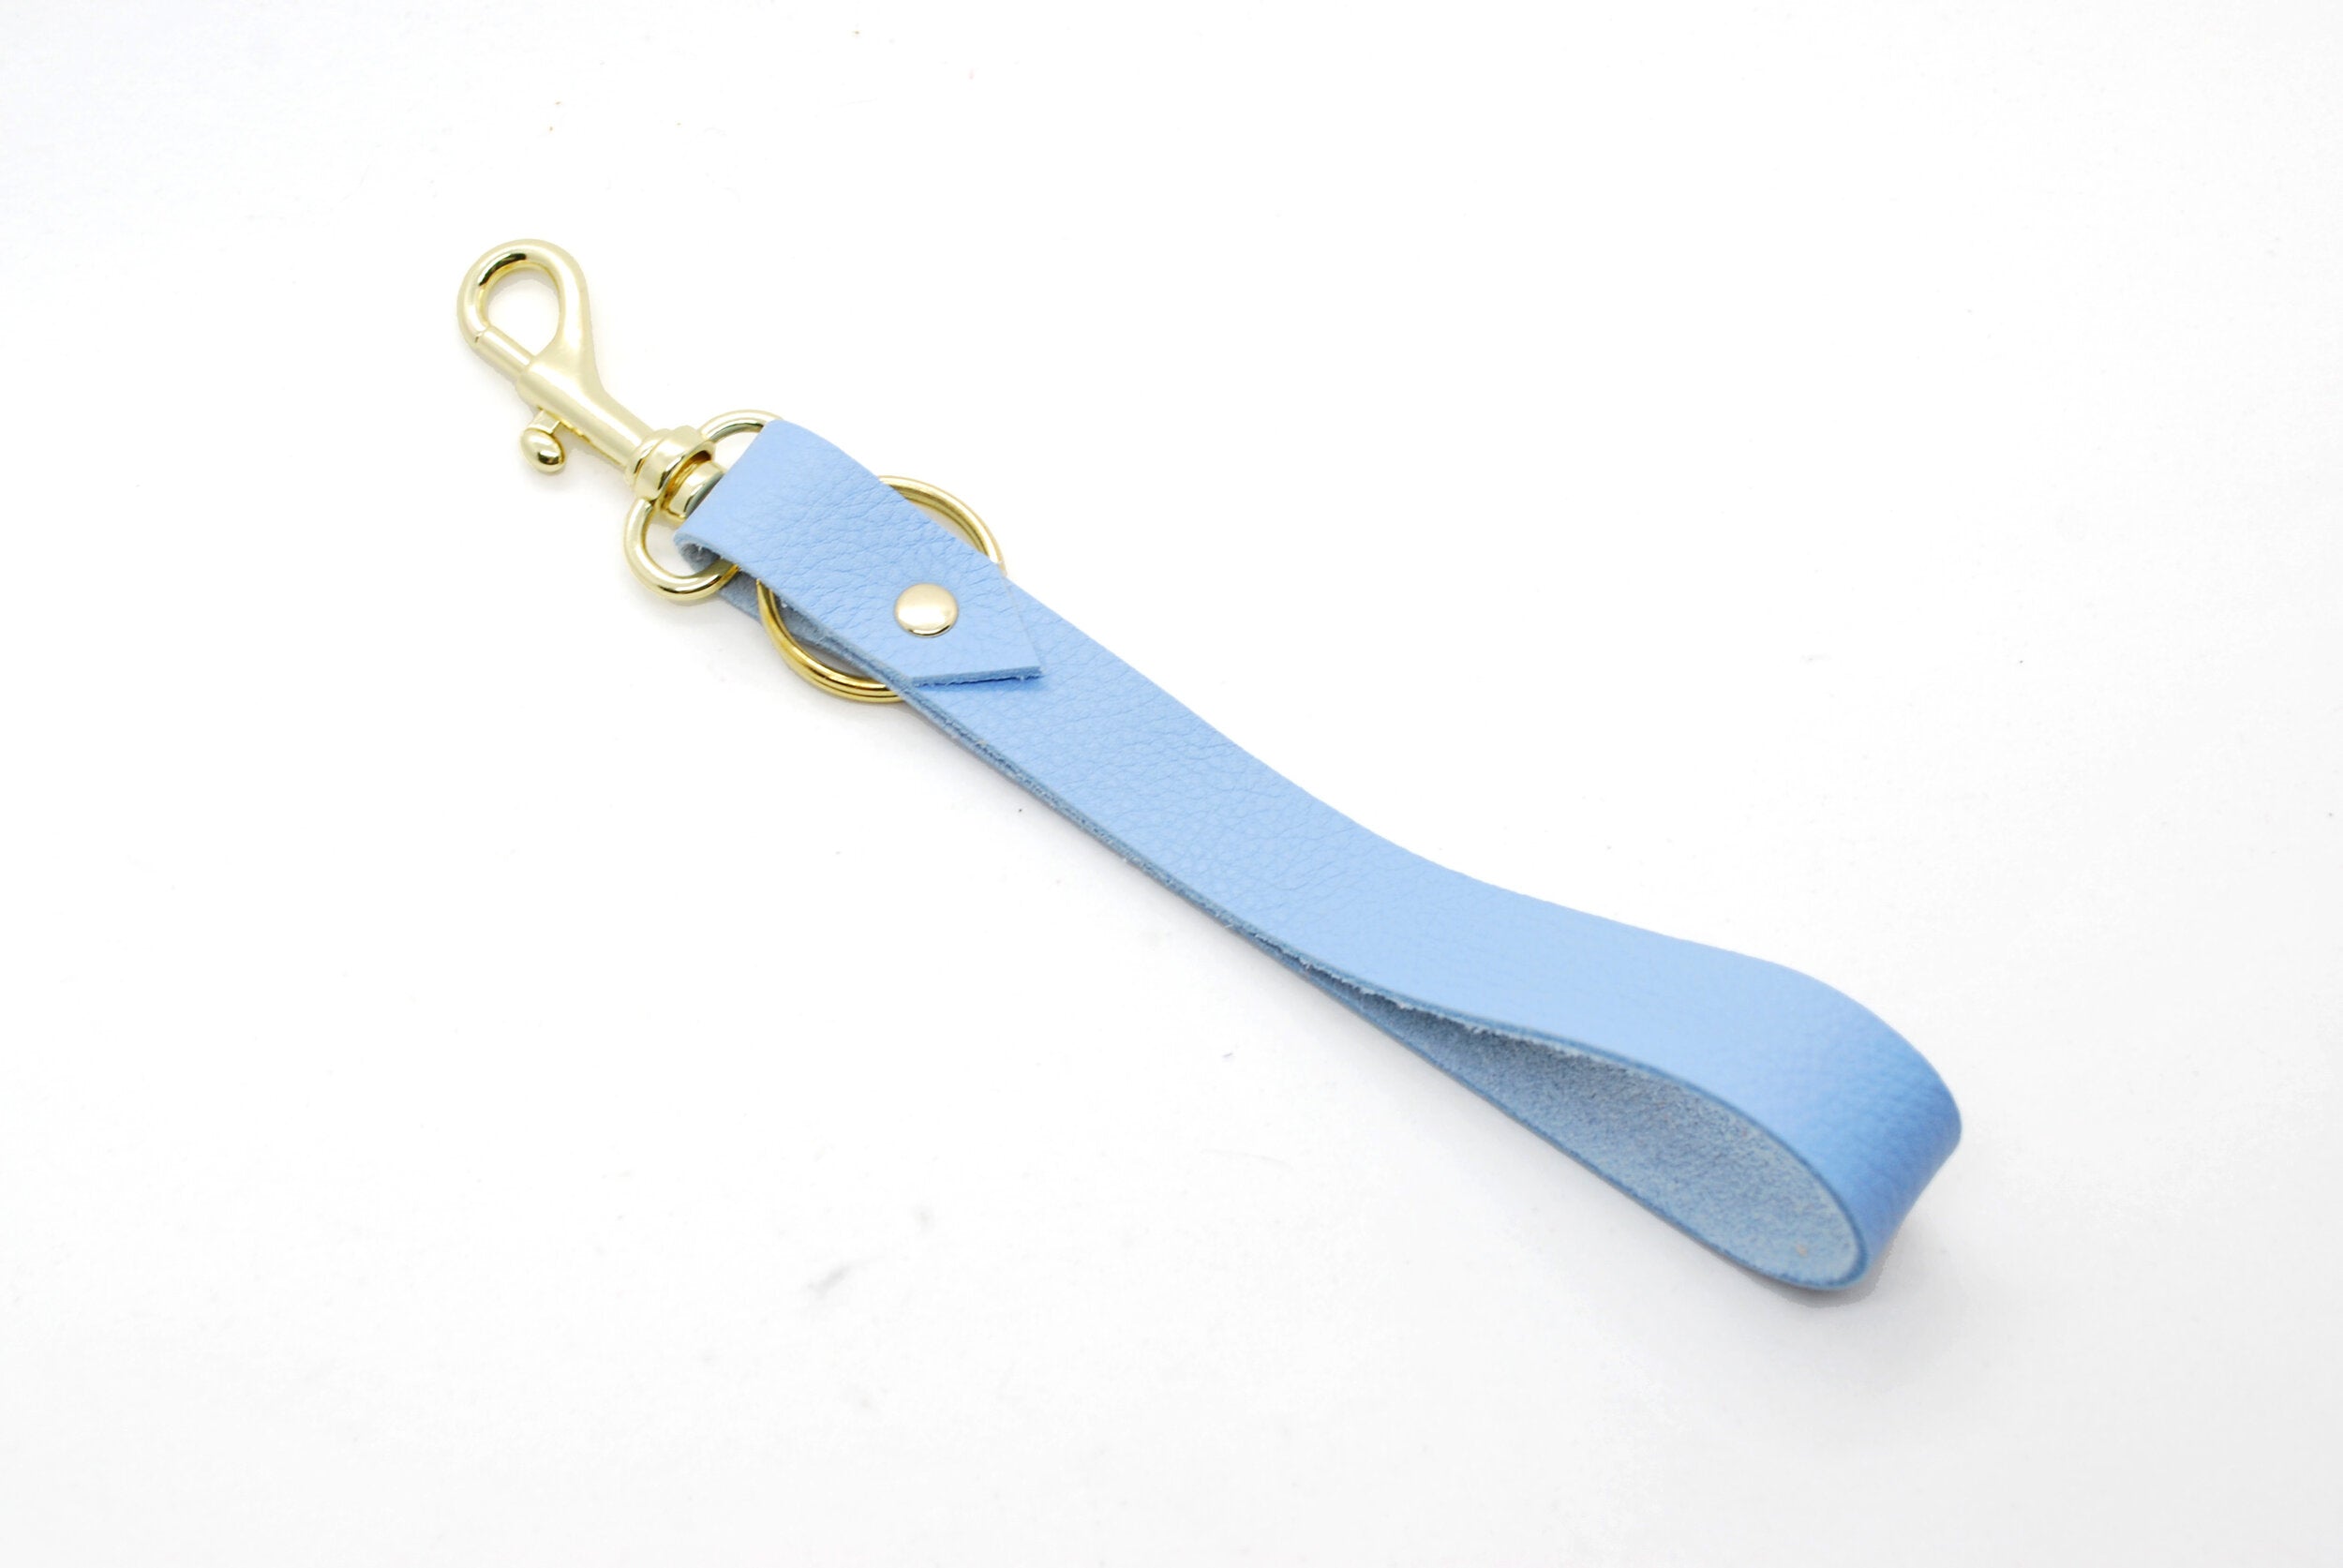 wrist loop key chain in periwinkle blue leather.